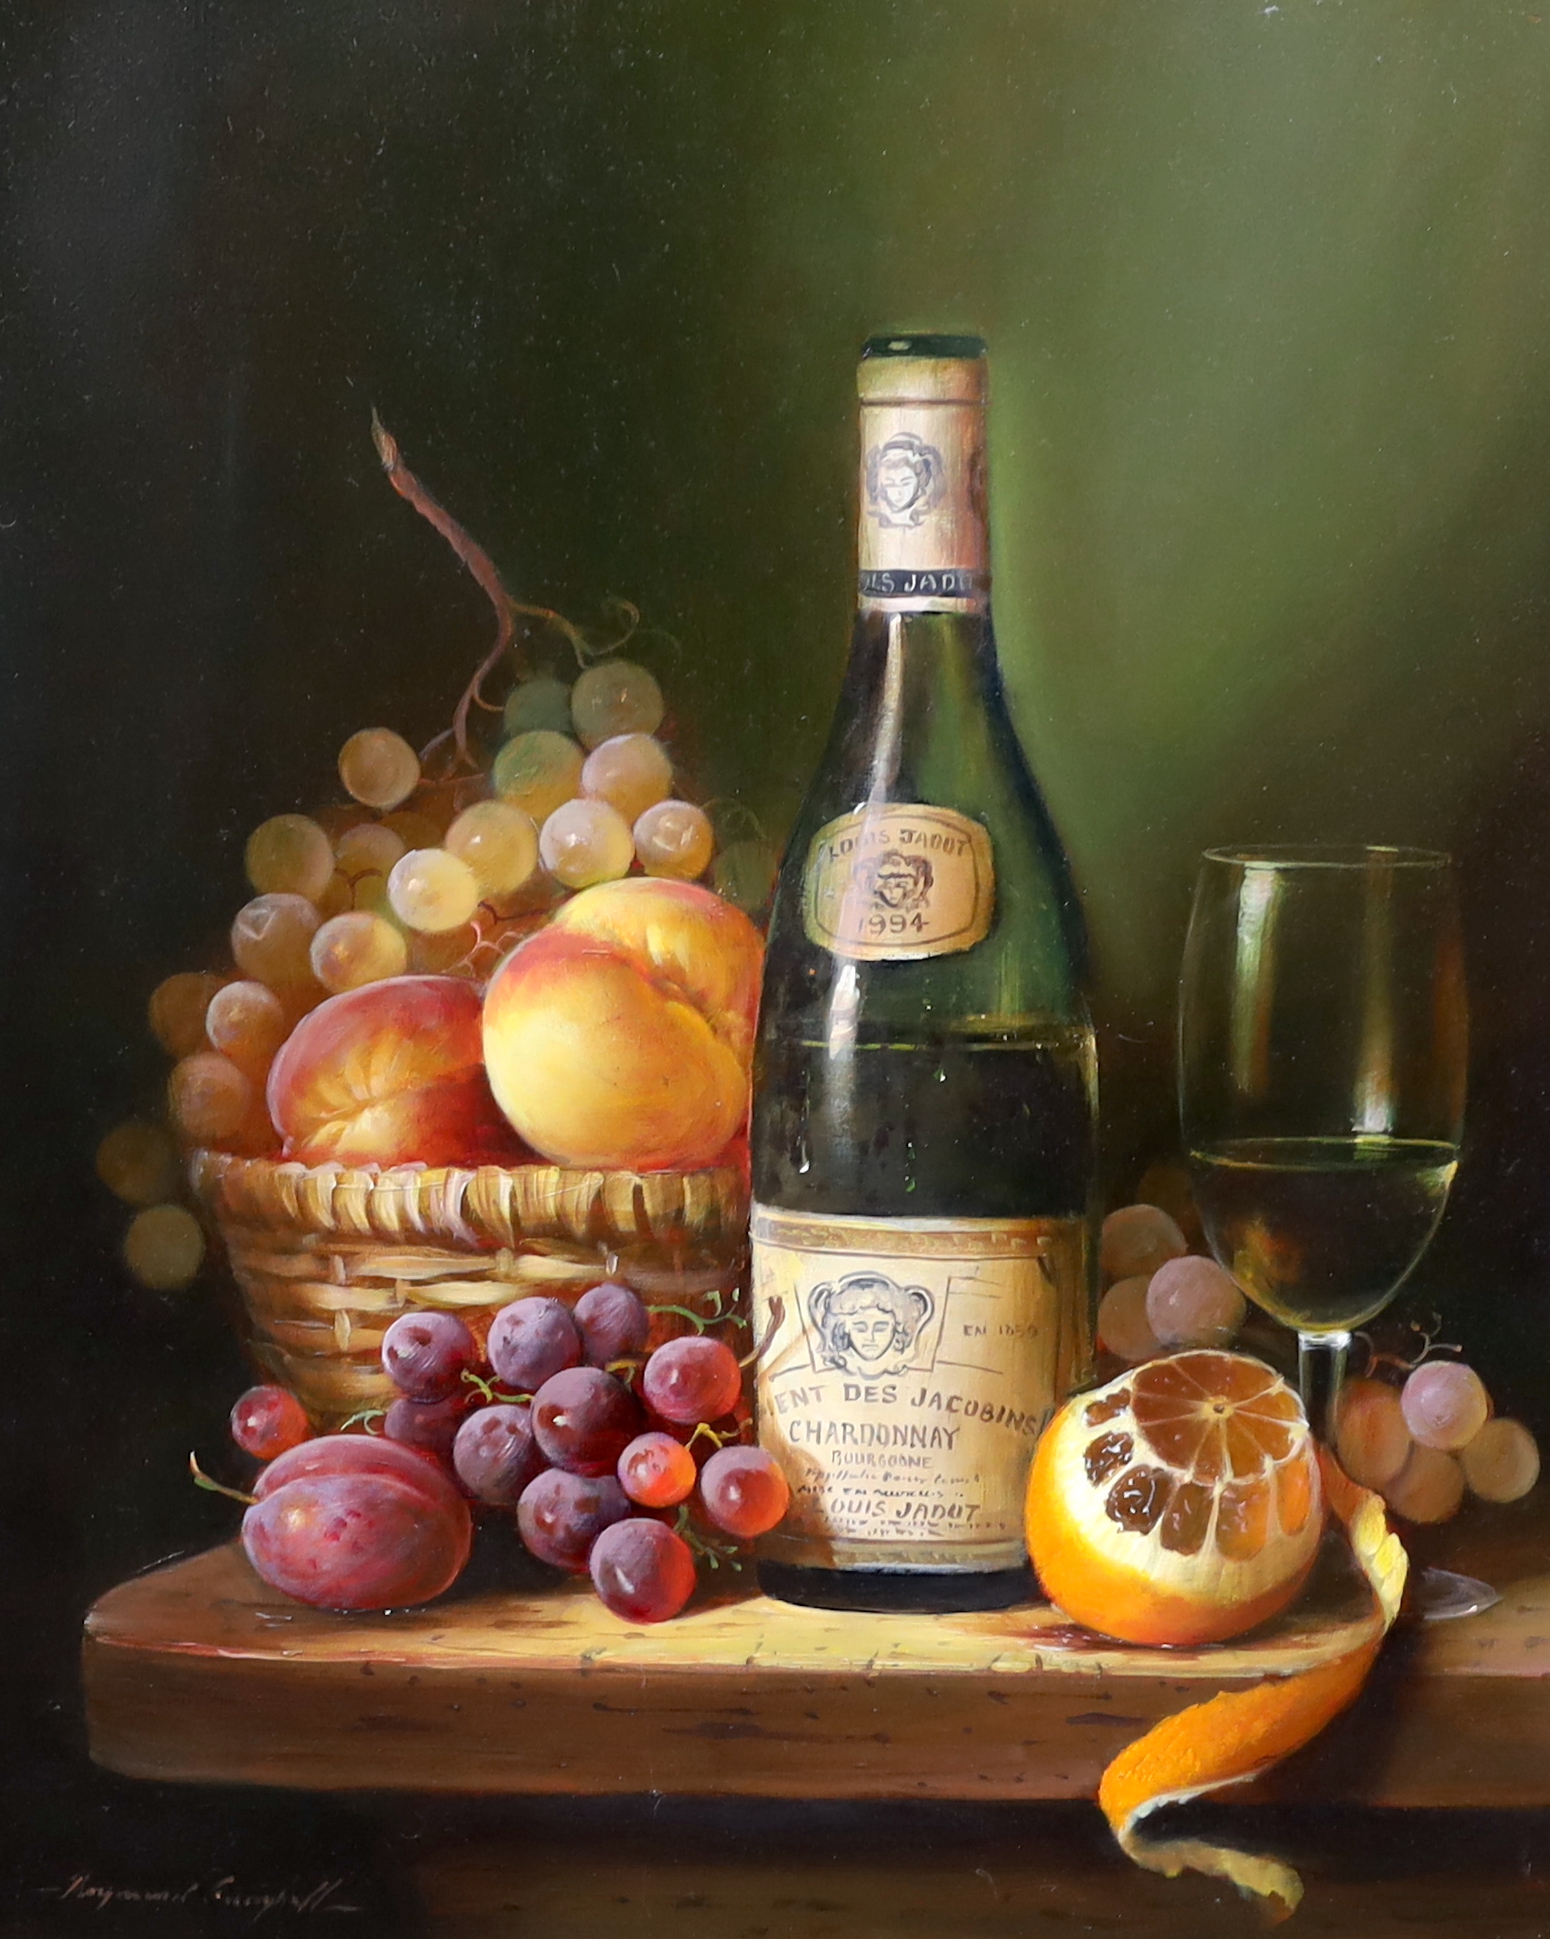 Raymond Campbell (English, b.1956), 'Louis Jabot 1994 Chardonnay', oil on panel, 50 x 40cm